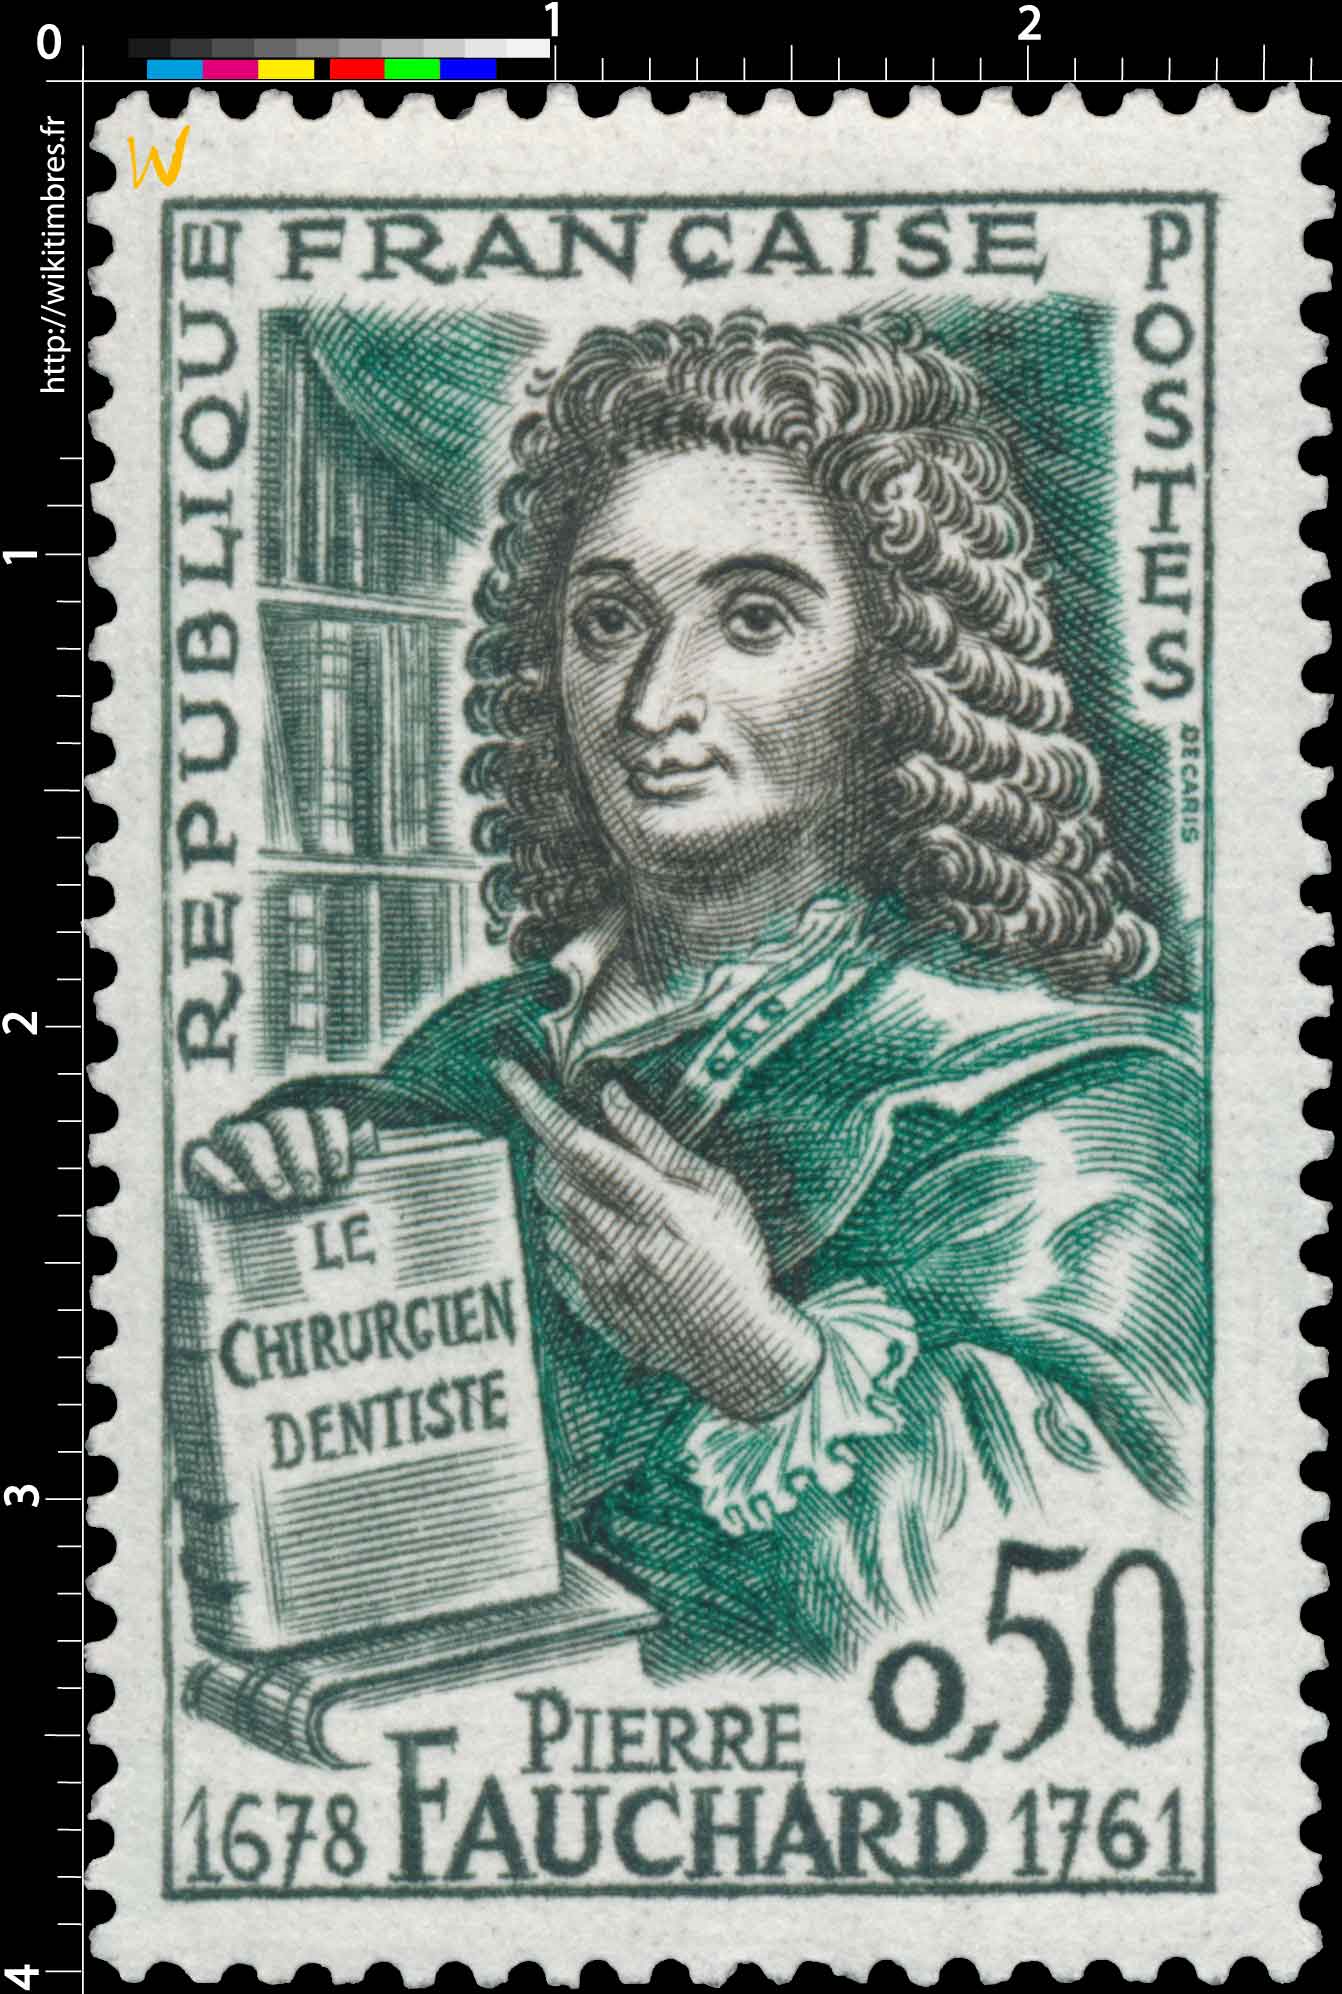 PIERRE FAUCHARD 1678-1761 LE CHIRURGIEN DENTISTE